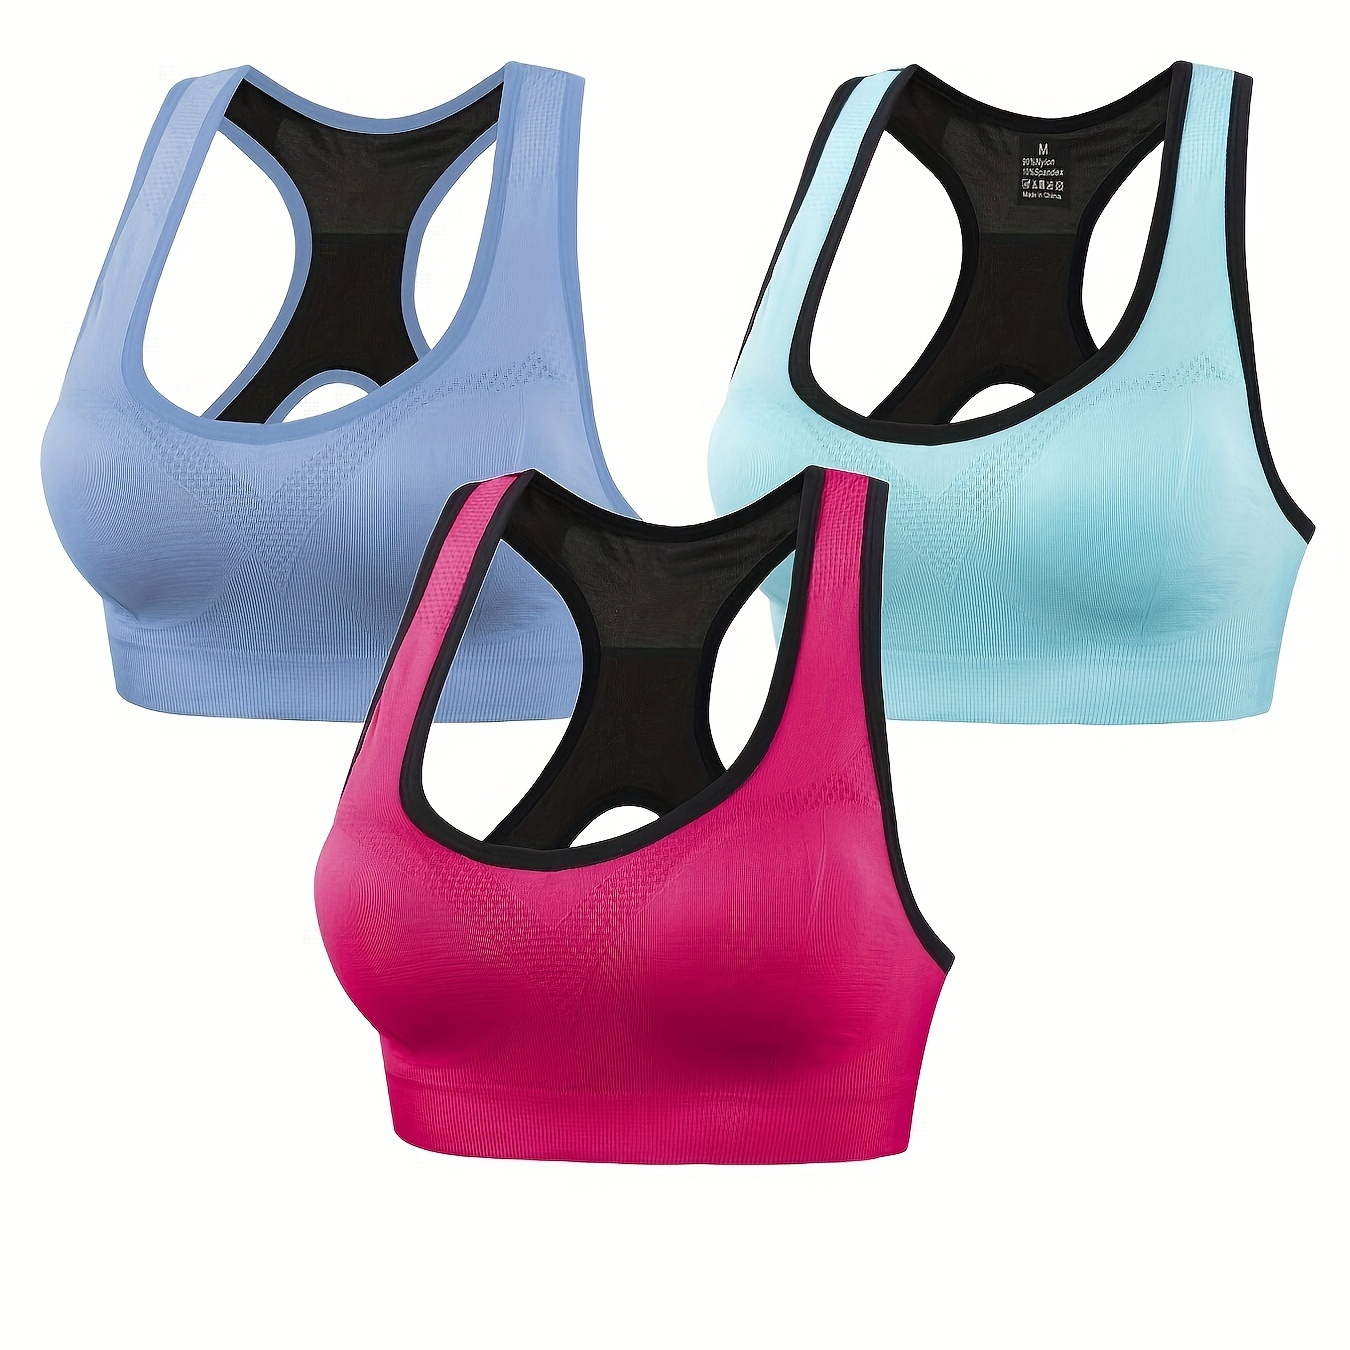 4pcs Cut Out Sports Bras, Comfy & Breathable Running Workout Tank Bra,  Women's Lingerie & Underwear